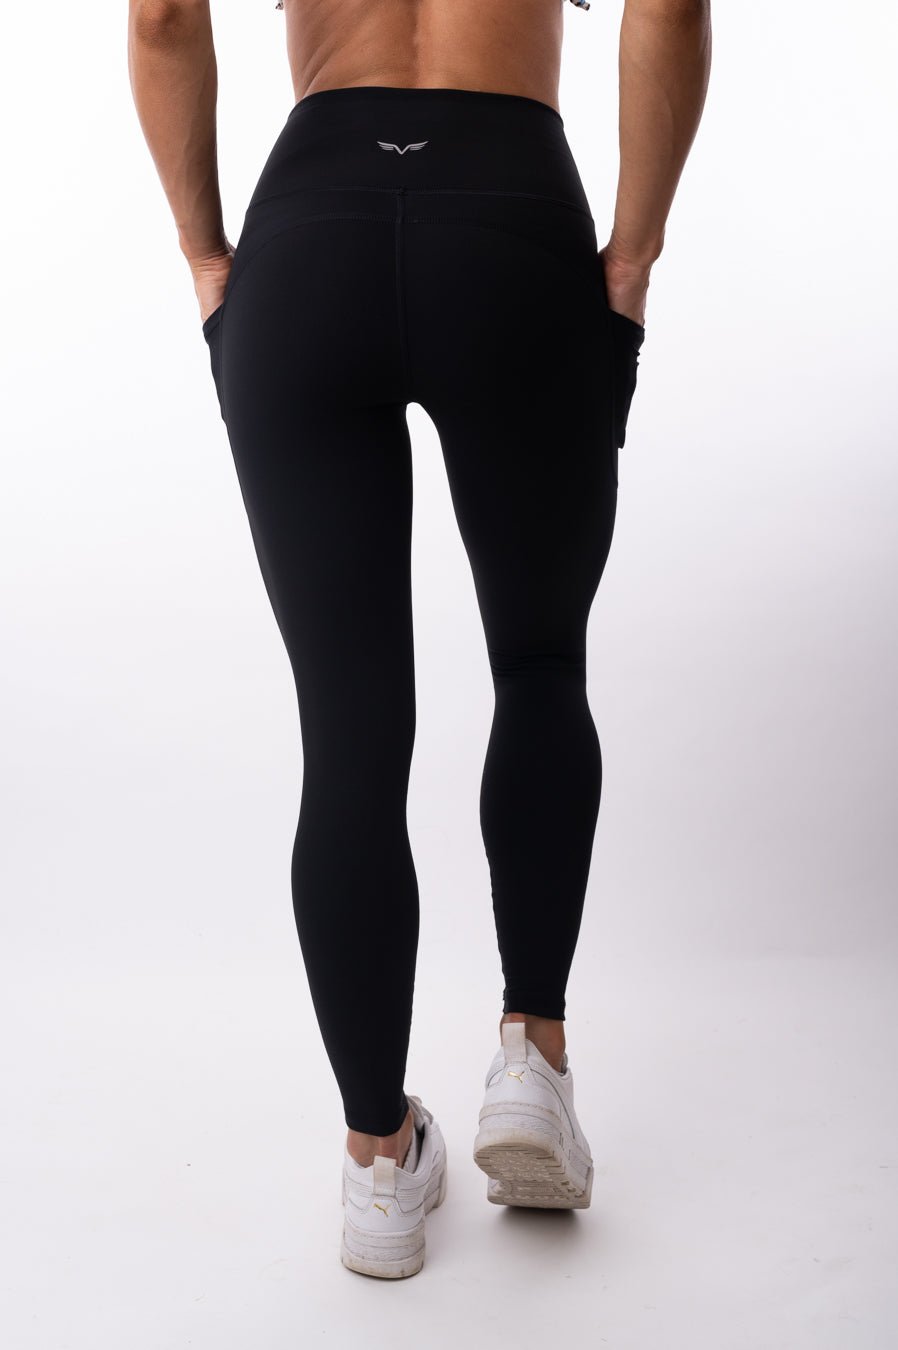 ATHLETA FLATIRON TUX TIGHT BLACK YOGA Pants #35373-00 Size Medium Petite